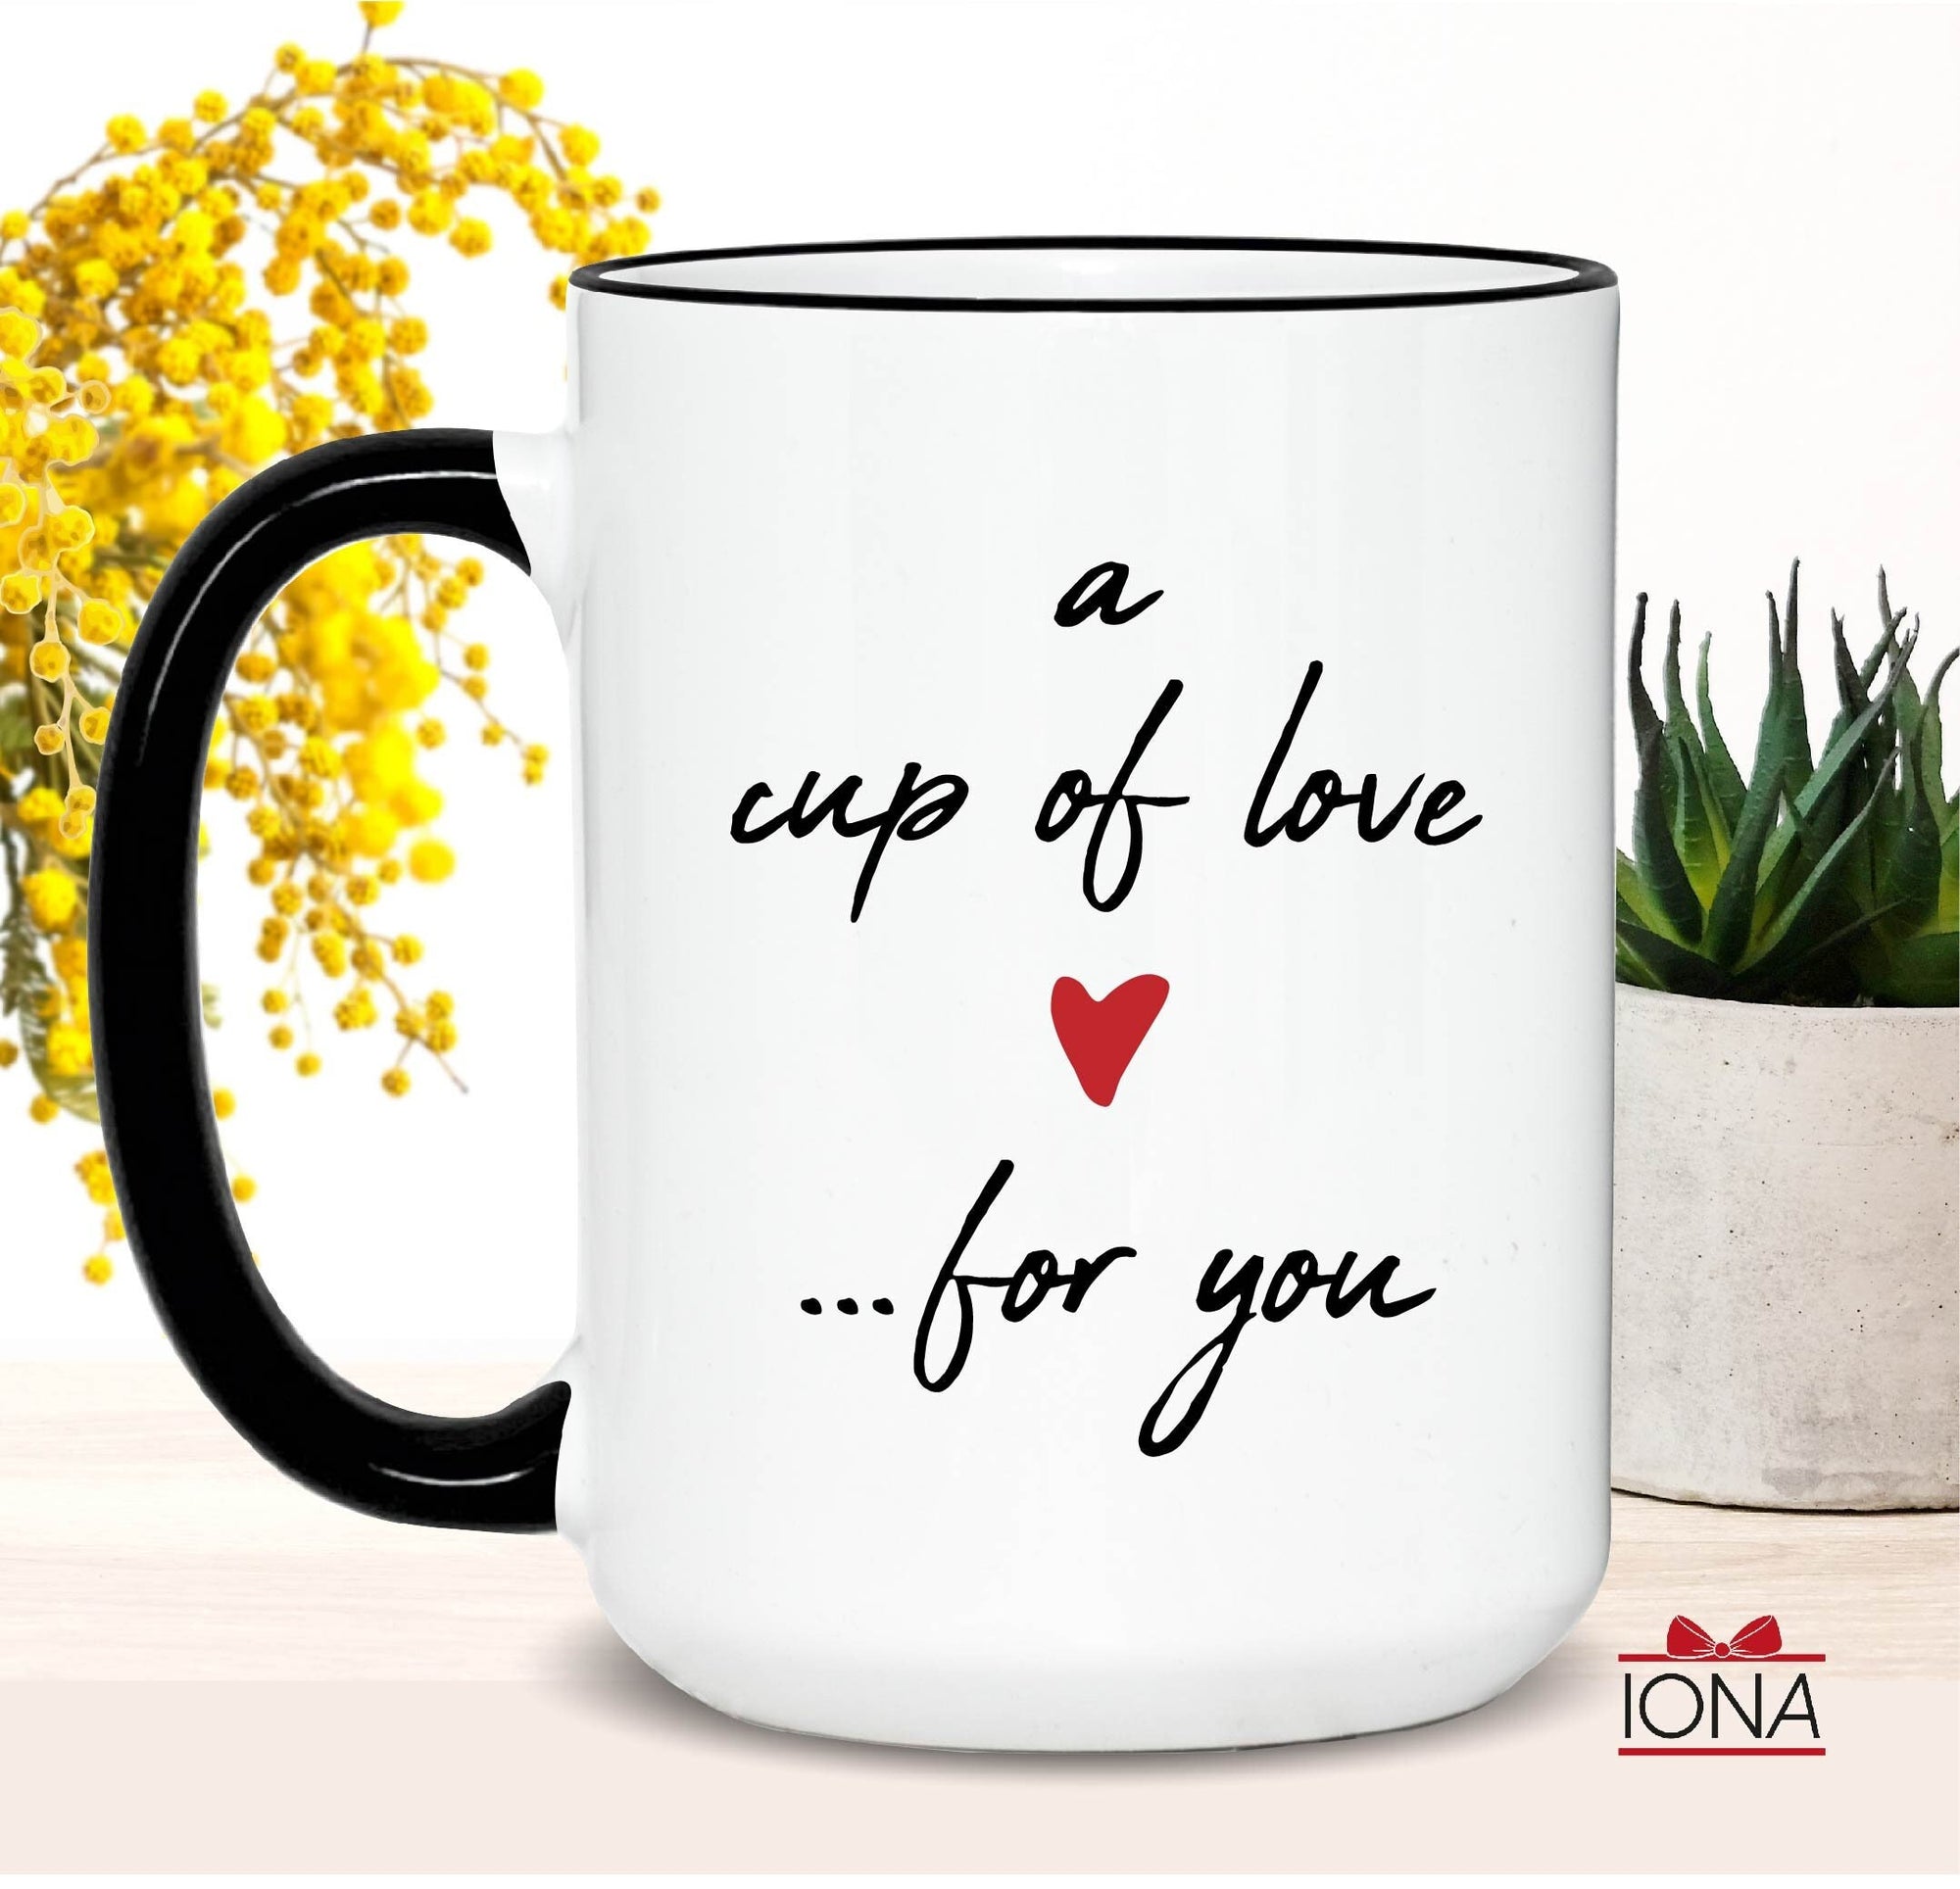 Valentines Day Coffee Mug, Romantic Gifts for Her, Love Mug, Cup of Love For You Mug, Sending Love Gift, Friendship Mug, Gift for Girlfriend